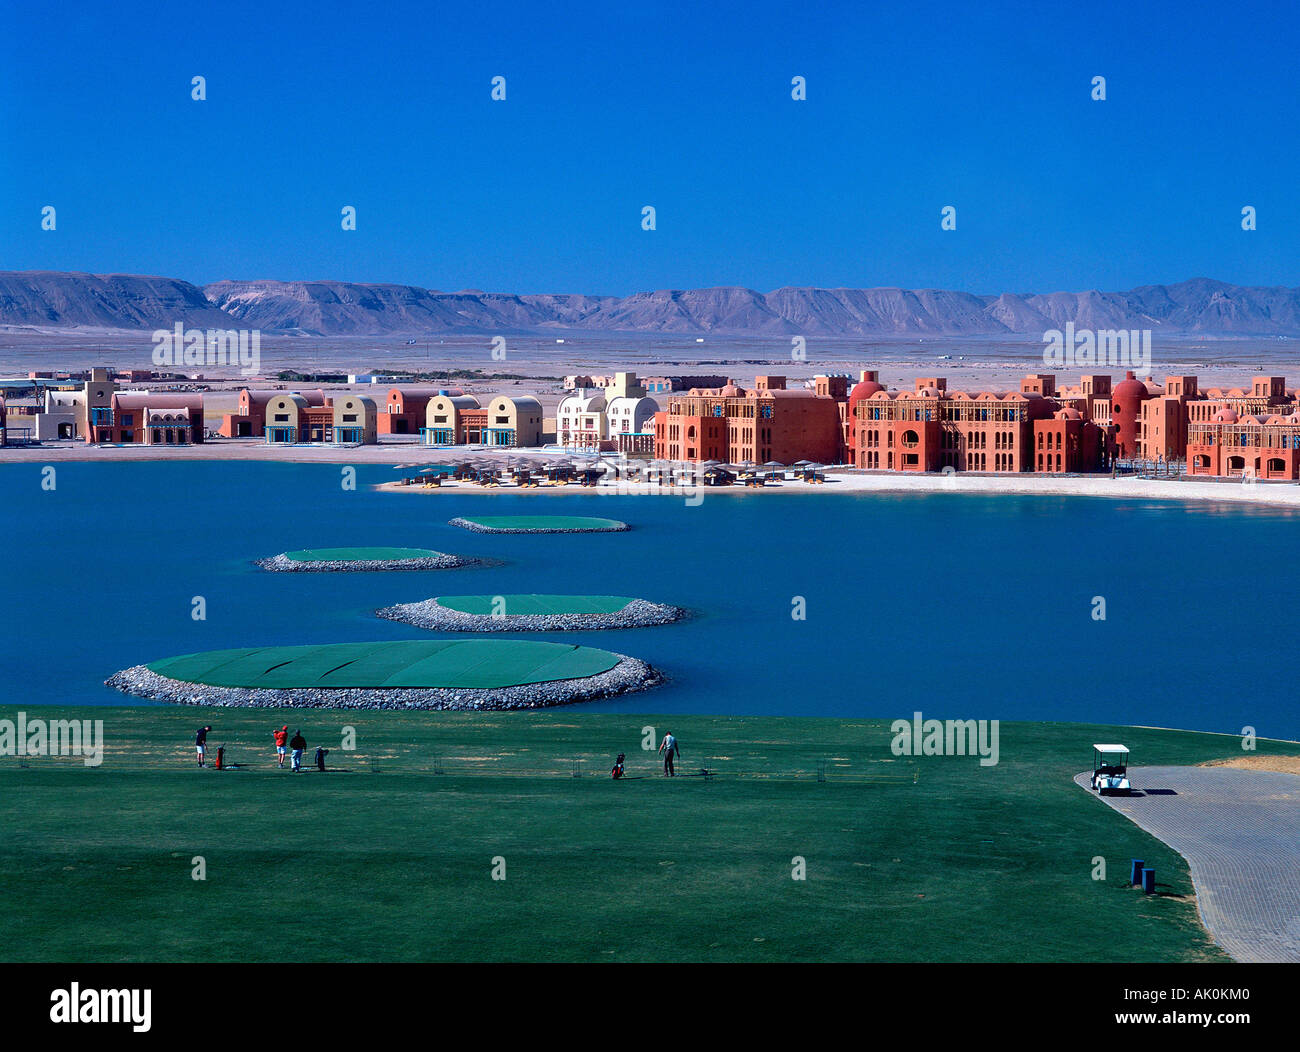 Steigenberger Hotel El Gouna / Hurghada Stock Photo